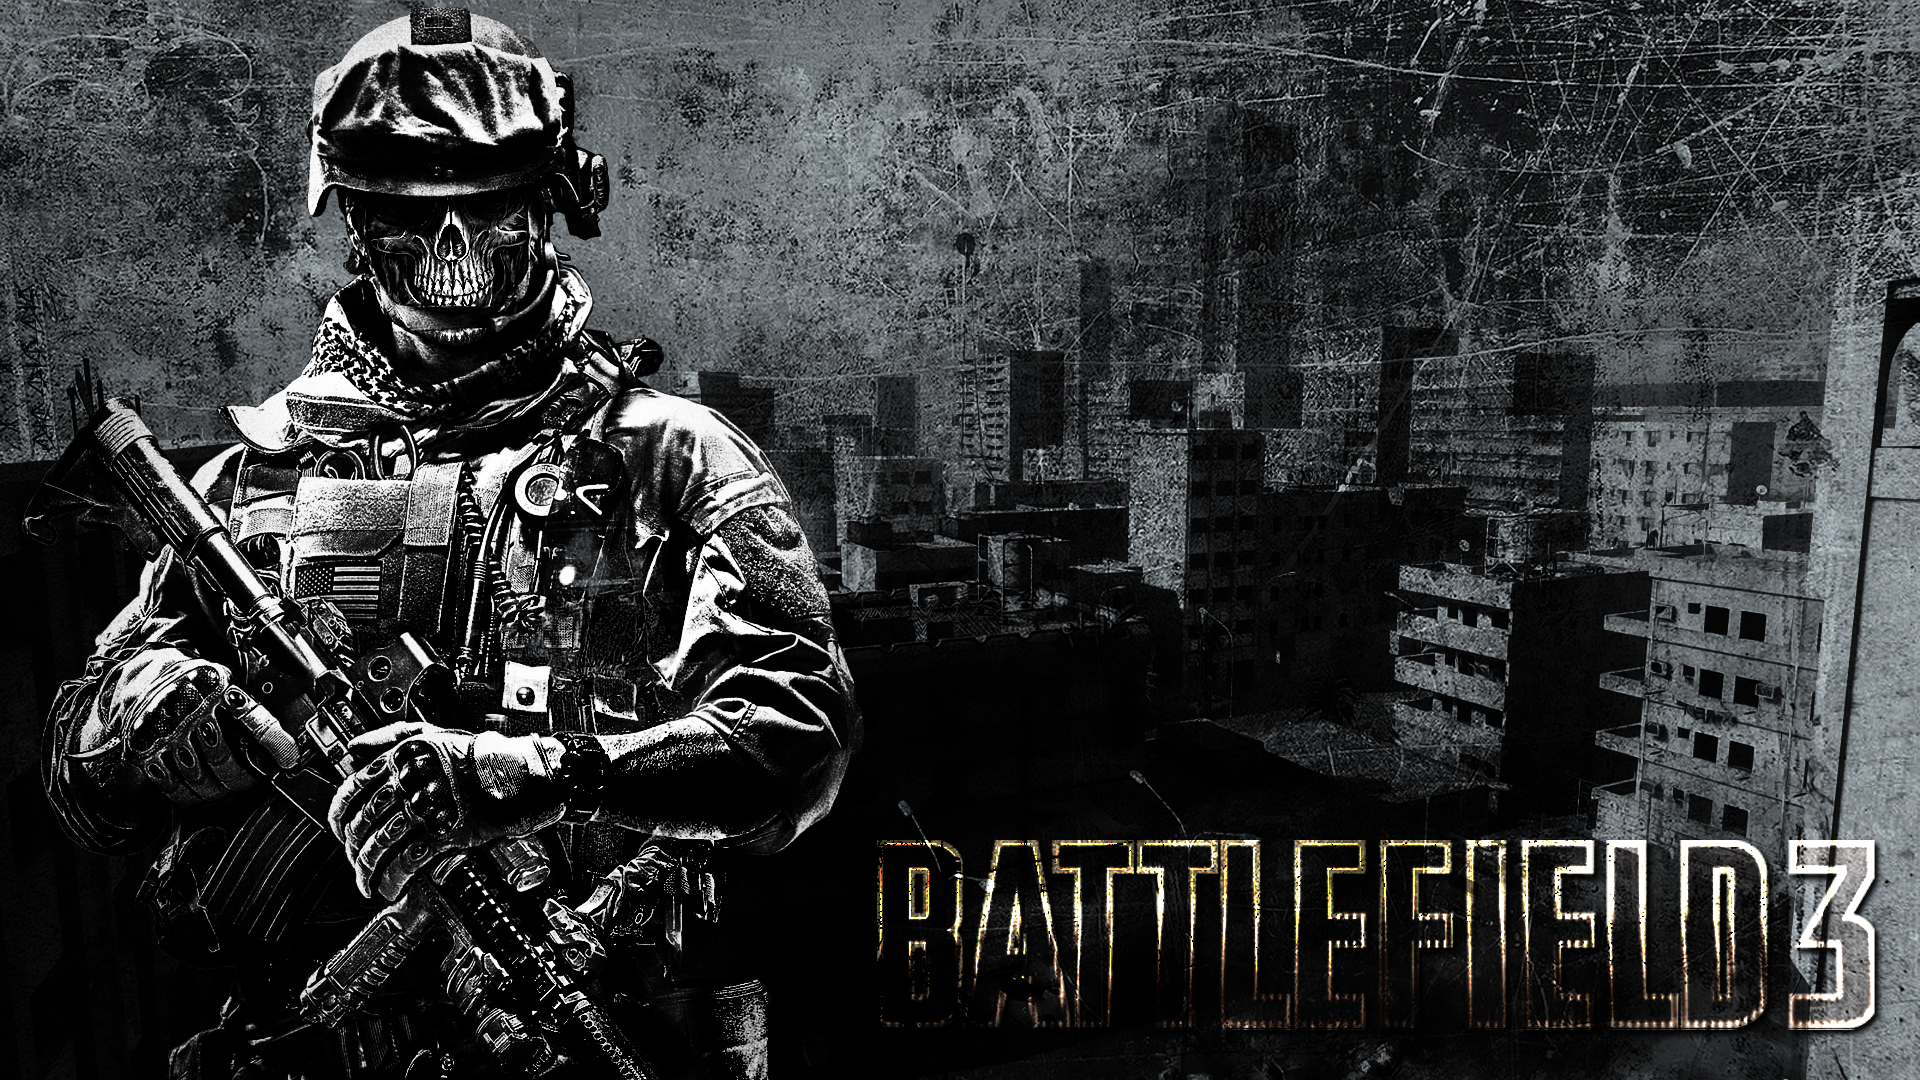 48+] Battlefield Wallpaper HD - WallpaperSafari